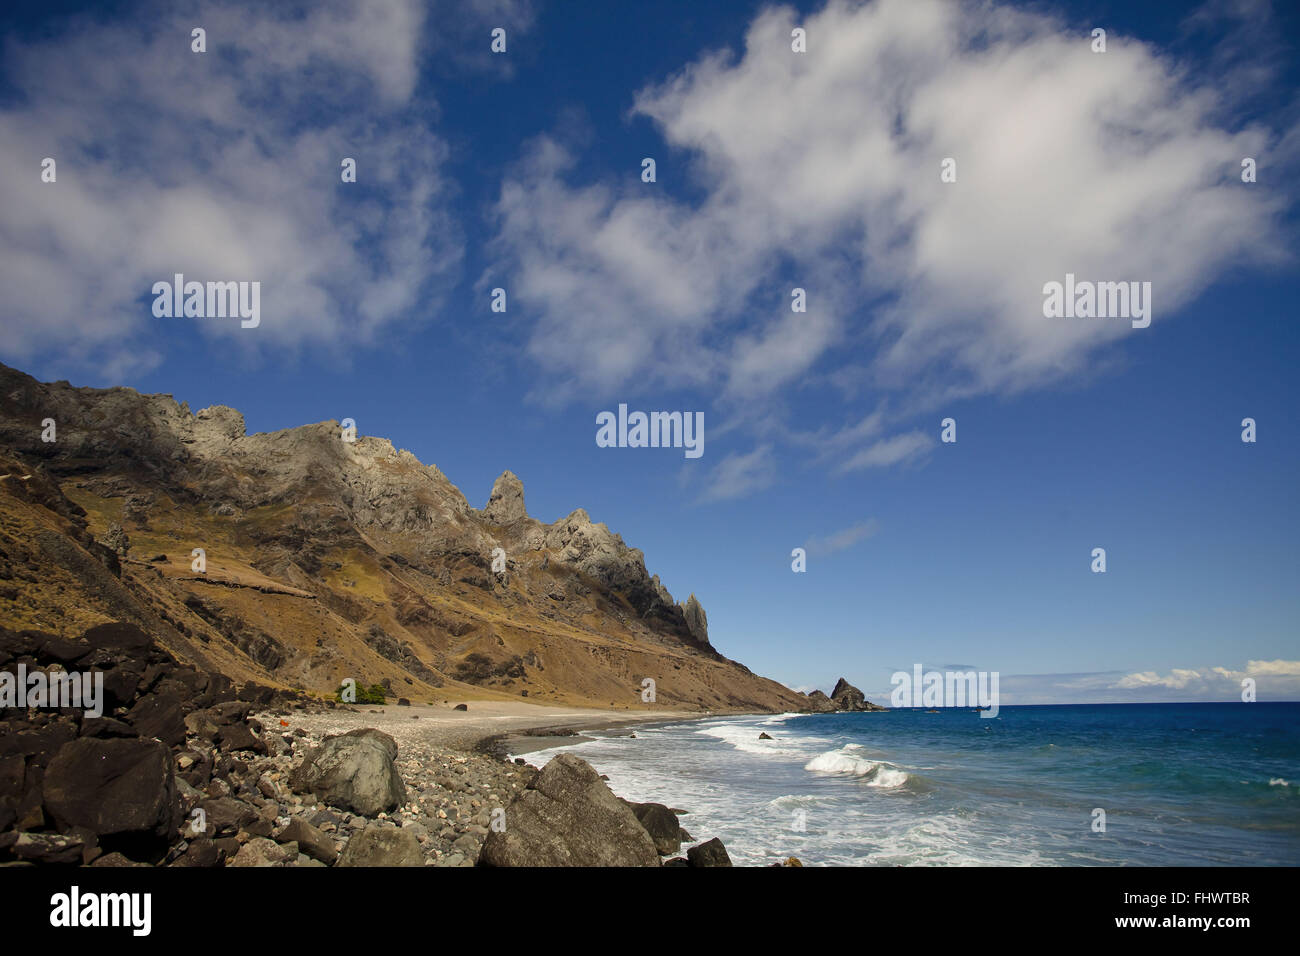 Ilha da Trindade with Atlantic Ocean in the background Stock Photo